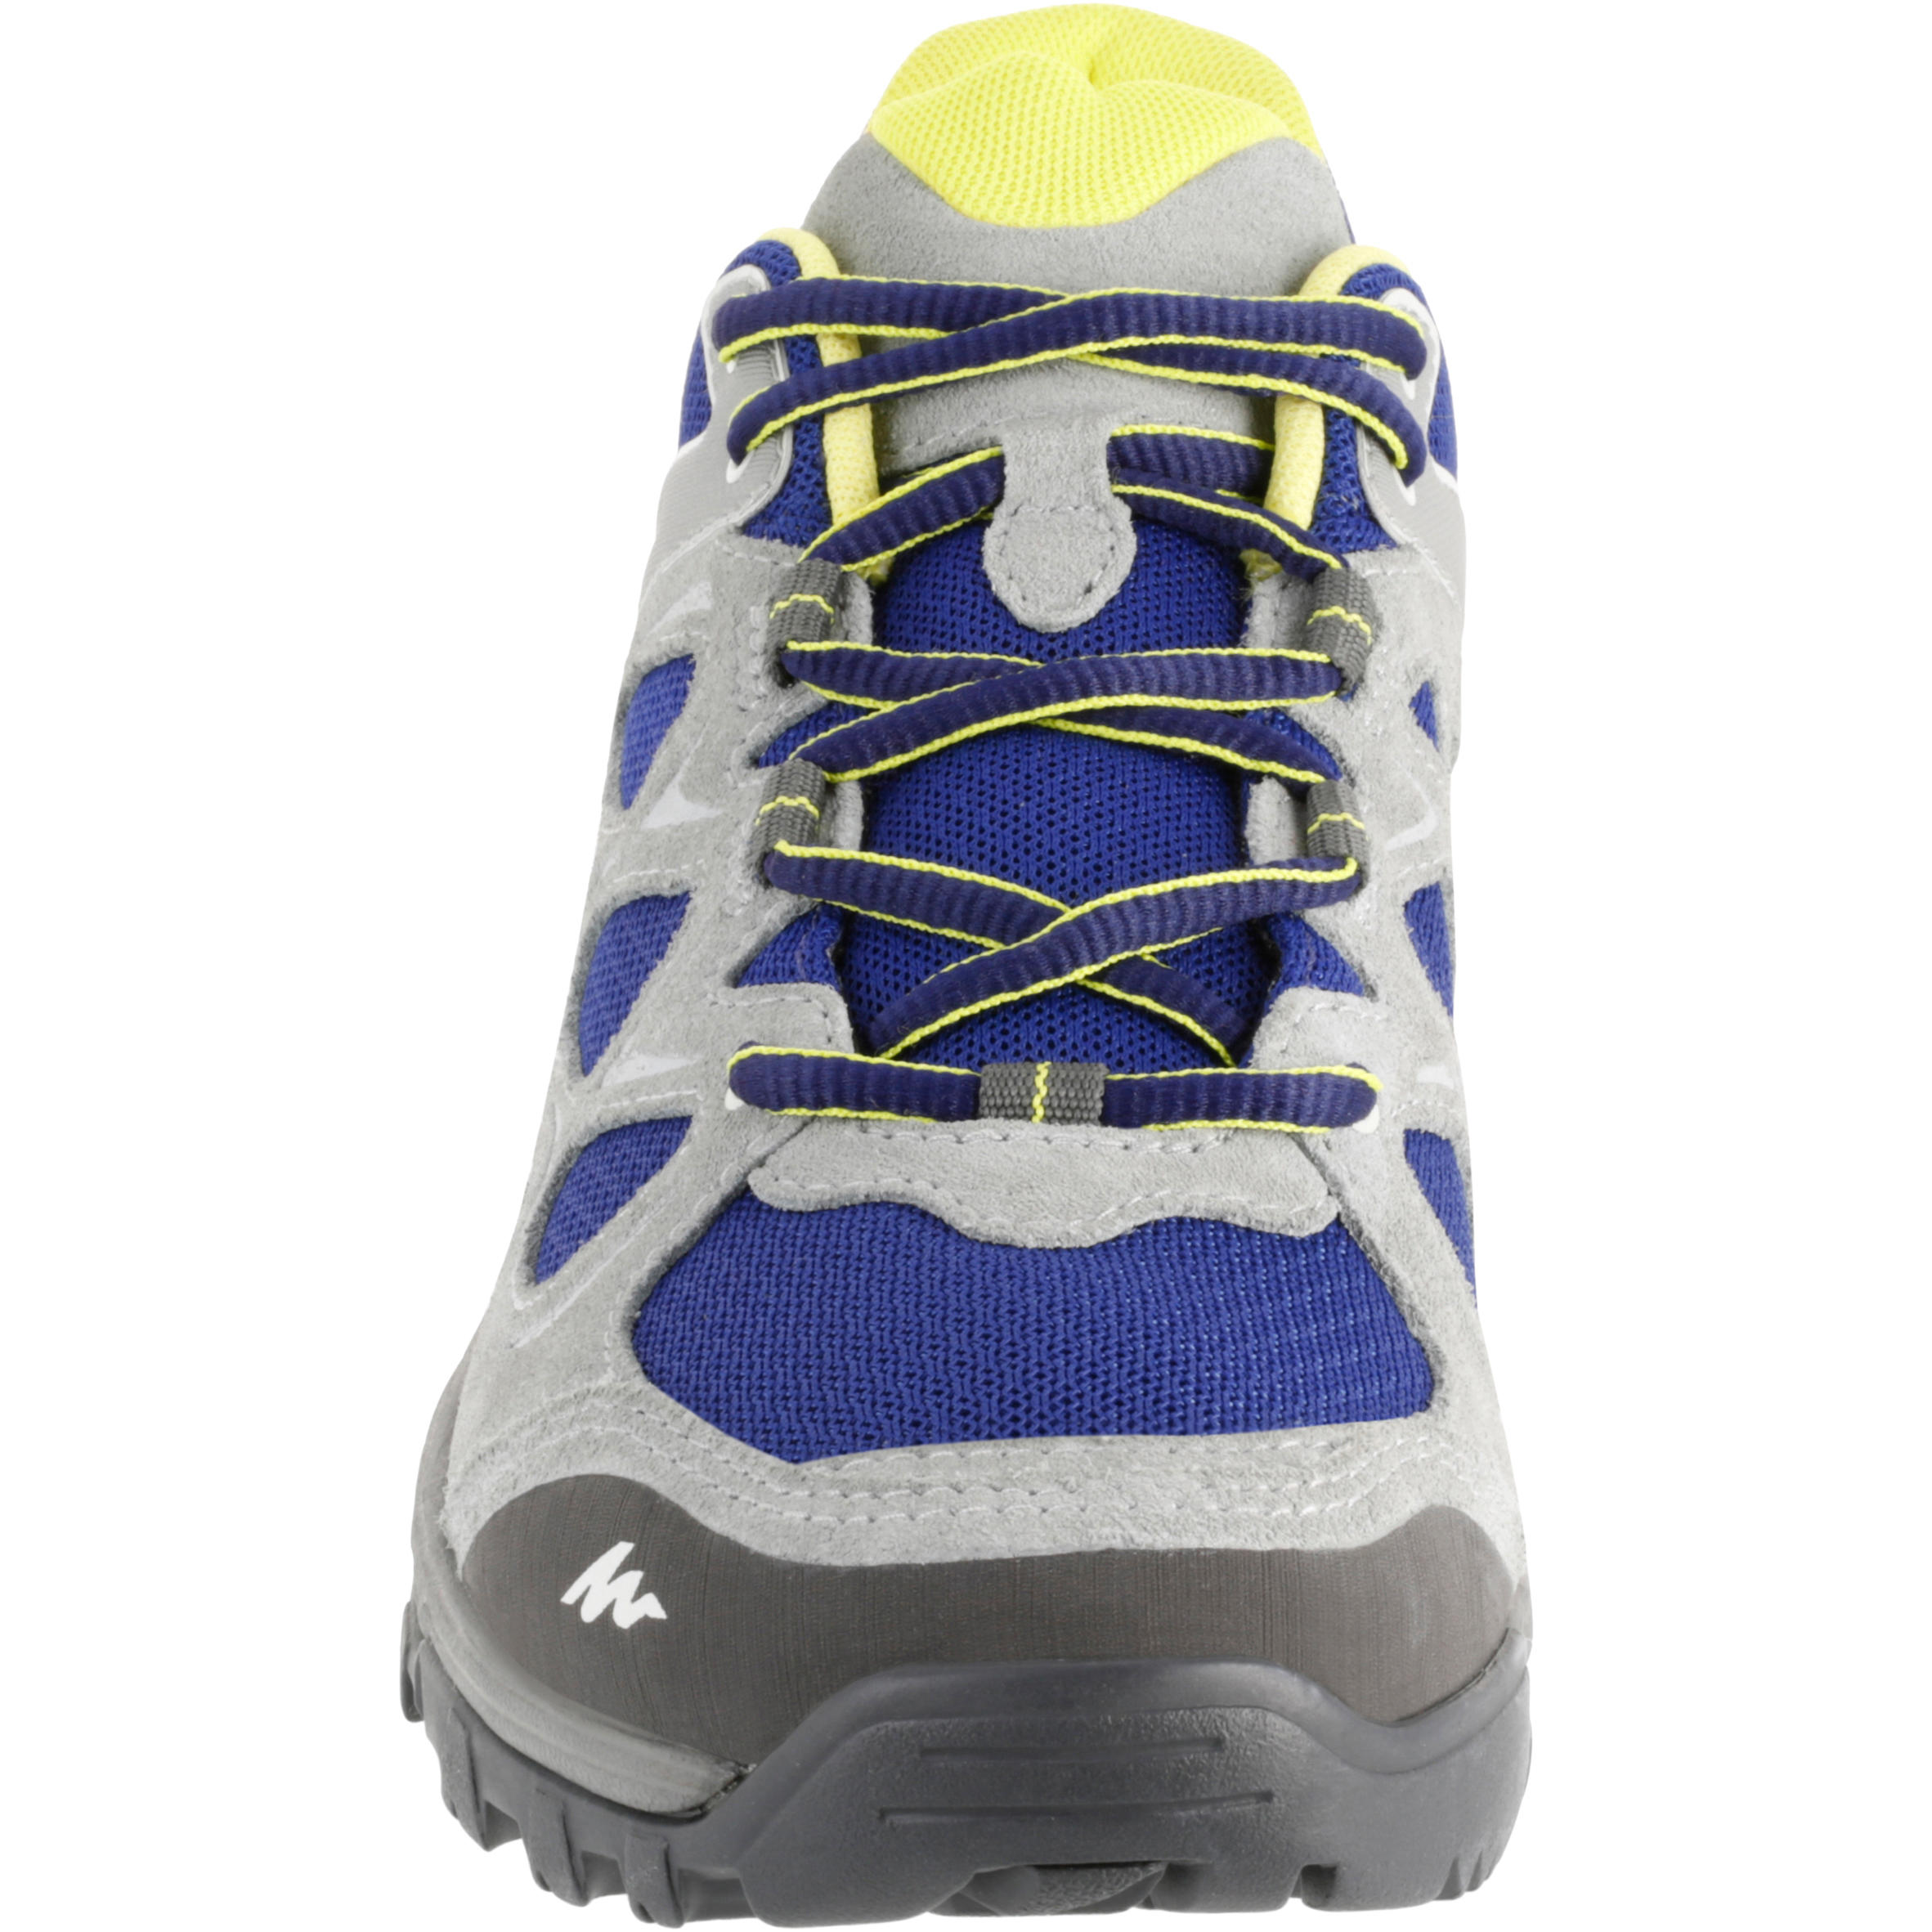 Forclaz Flex 3 Women's Hiking Boots - Blue/Grey 4/17